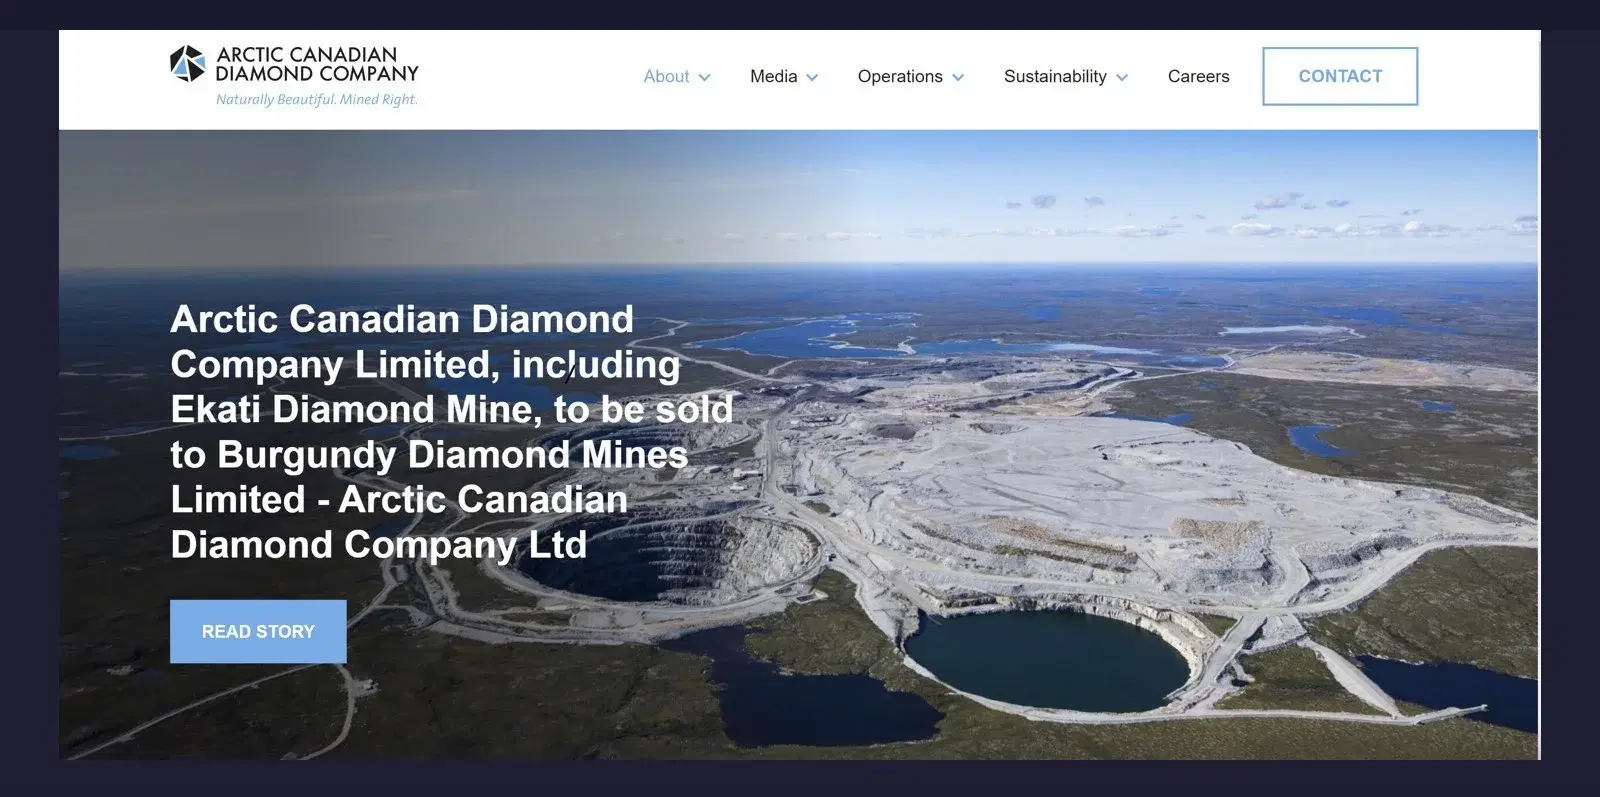 Dominion Diamond Corporation: A Canadian Mining Giant